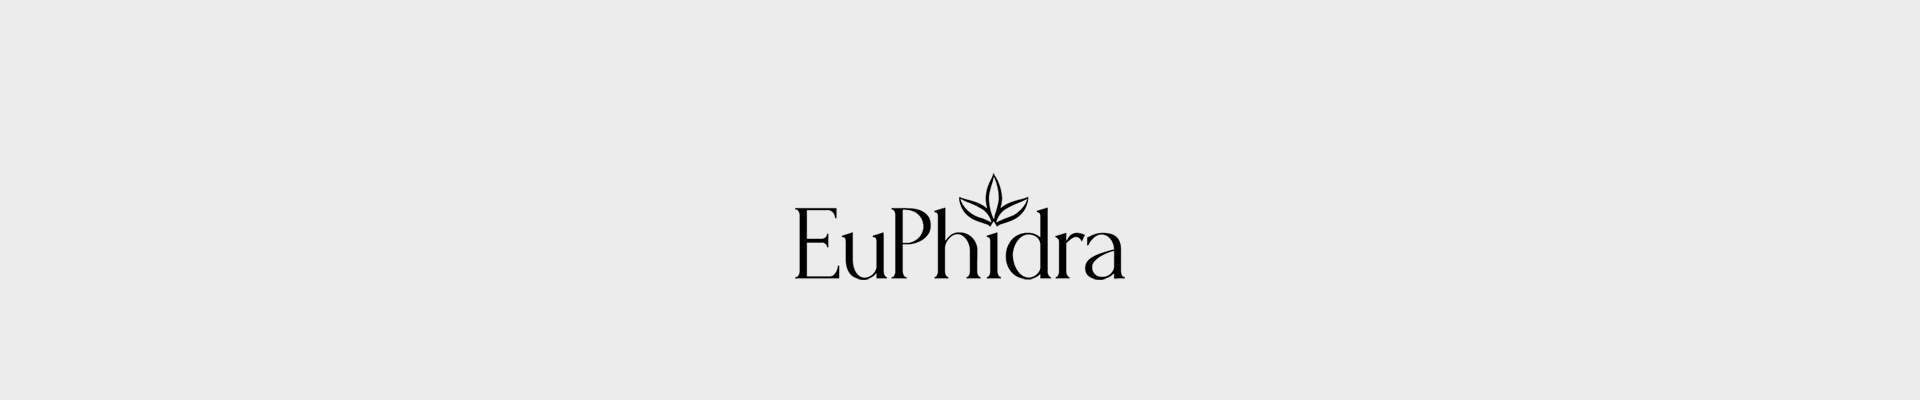 Logo_euphidra_02